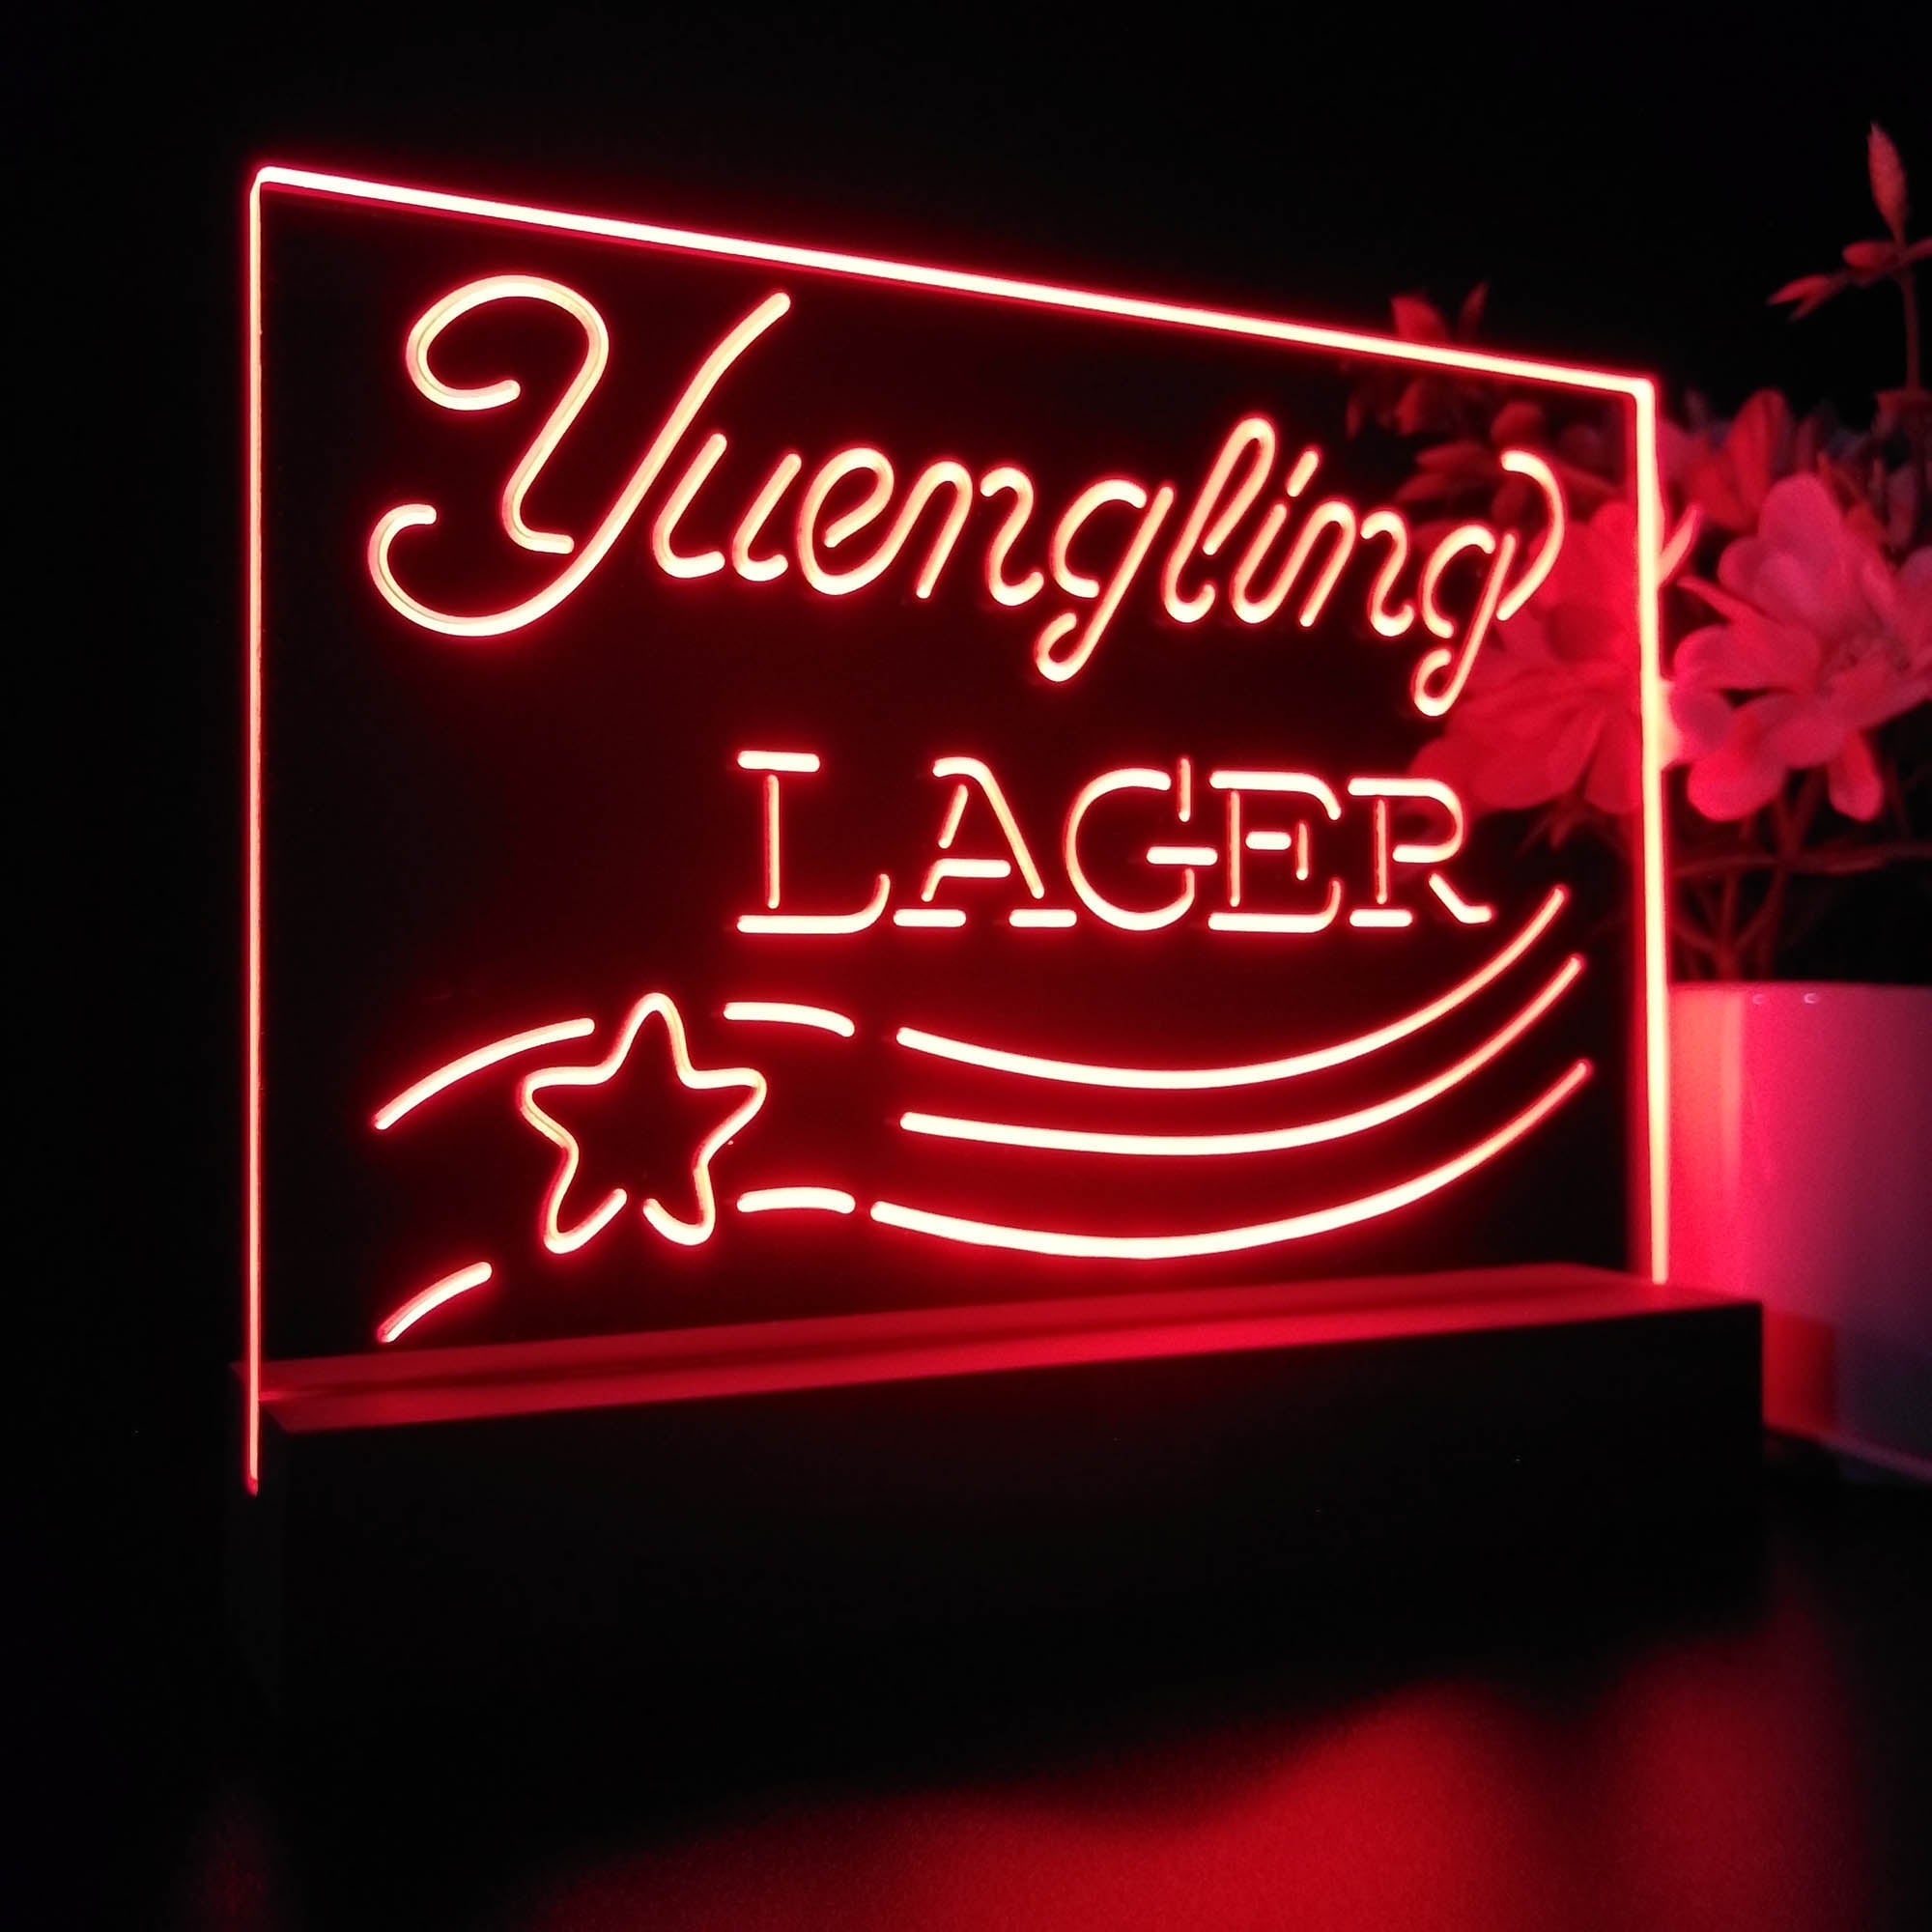 Yuengling Beer Larger Bar Neon Pub Bar Sign LED Lamp | PRO LED SIGN